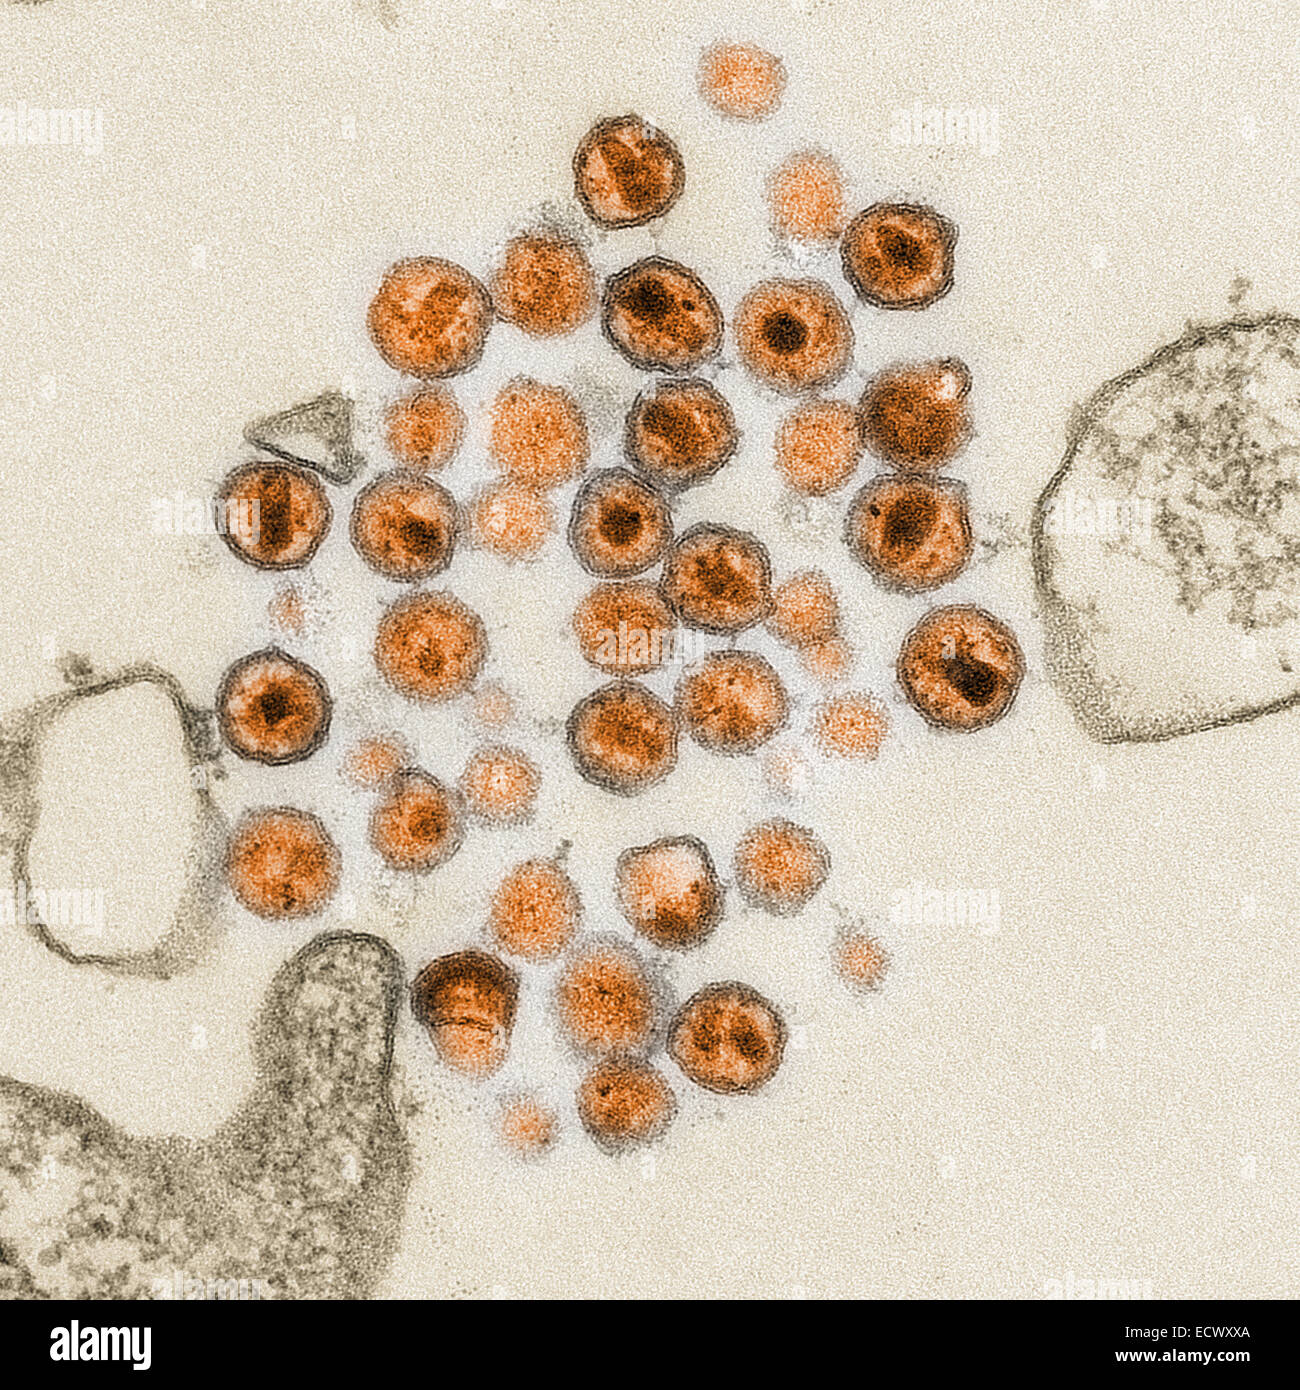 Electron micrograph of Human Immunodeficiency Virus, HIV. Stock Photo